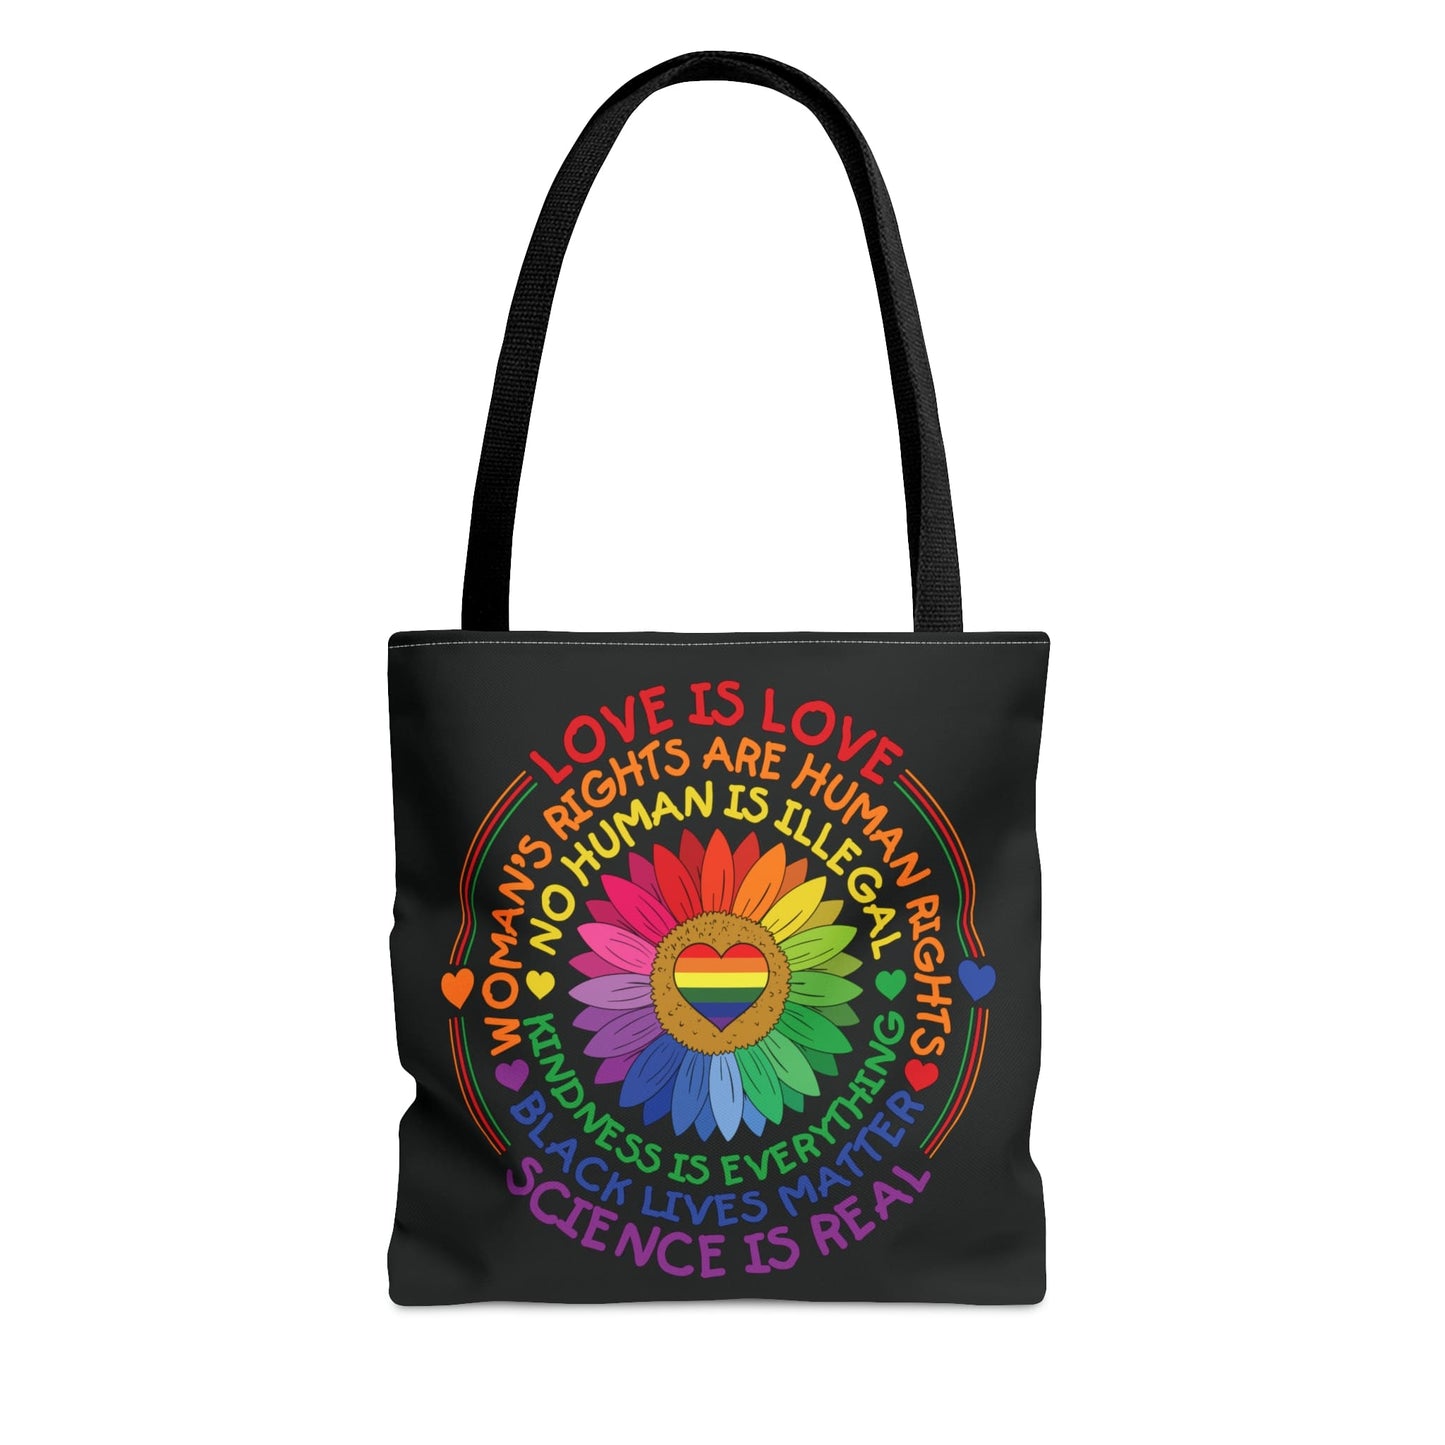 LGBTQ pride tote bag, human rights bag